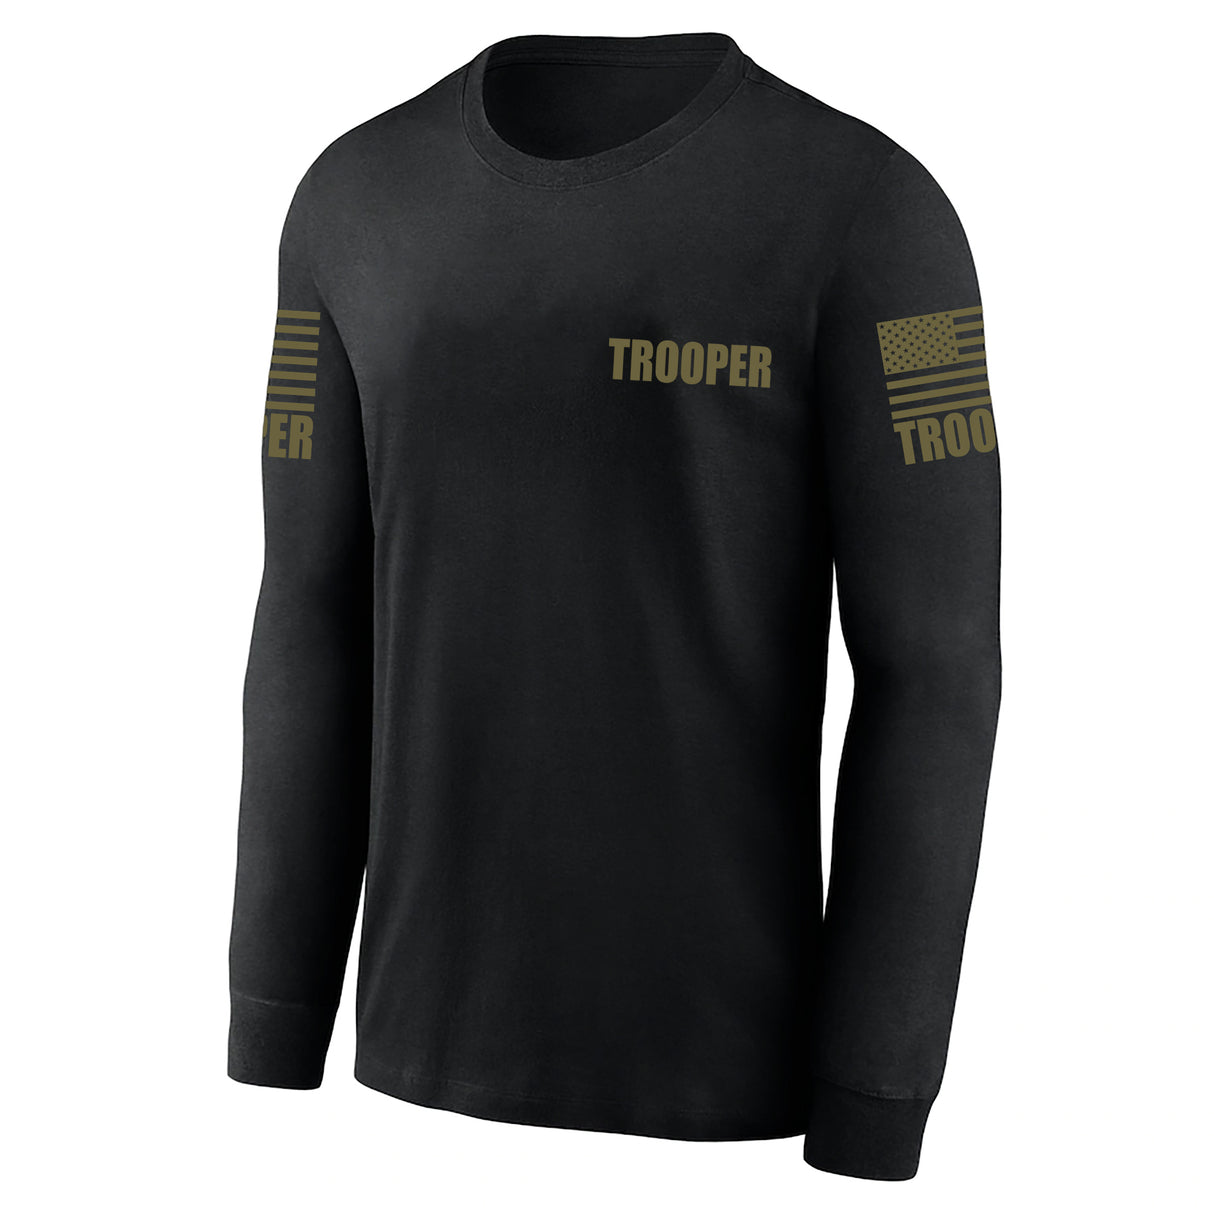 Black Trooper Men's Shirt - Long Sleeve - FEDS Apparel